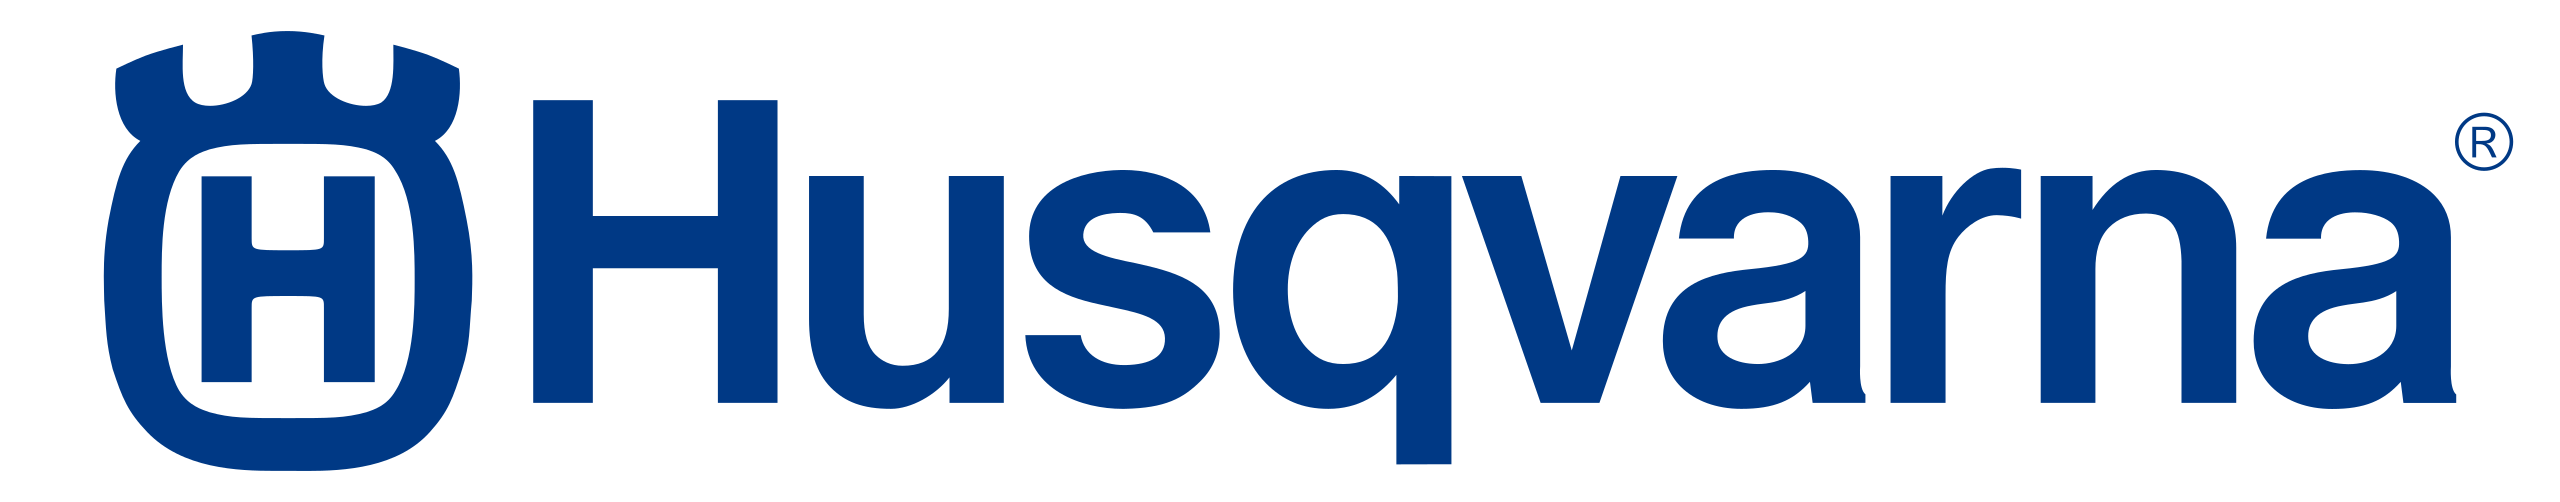 husq logo.png